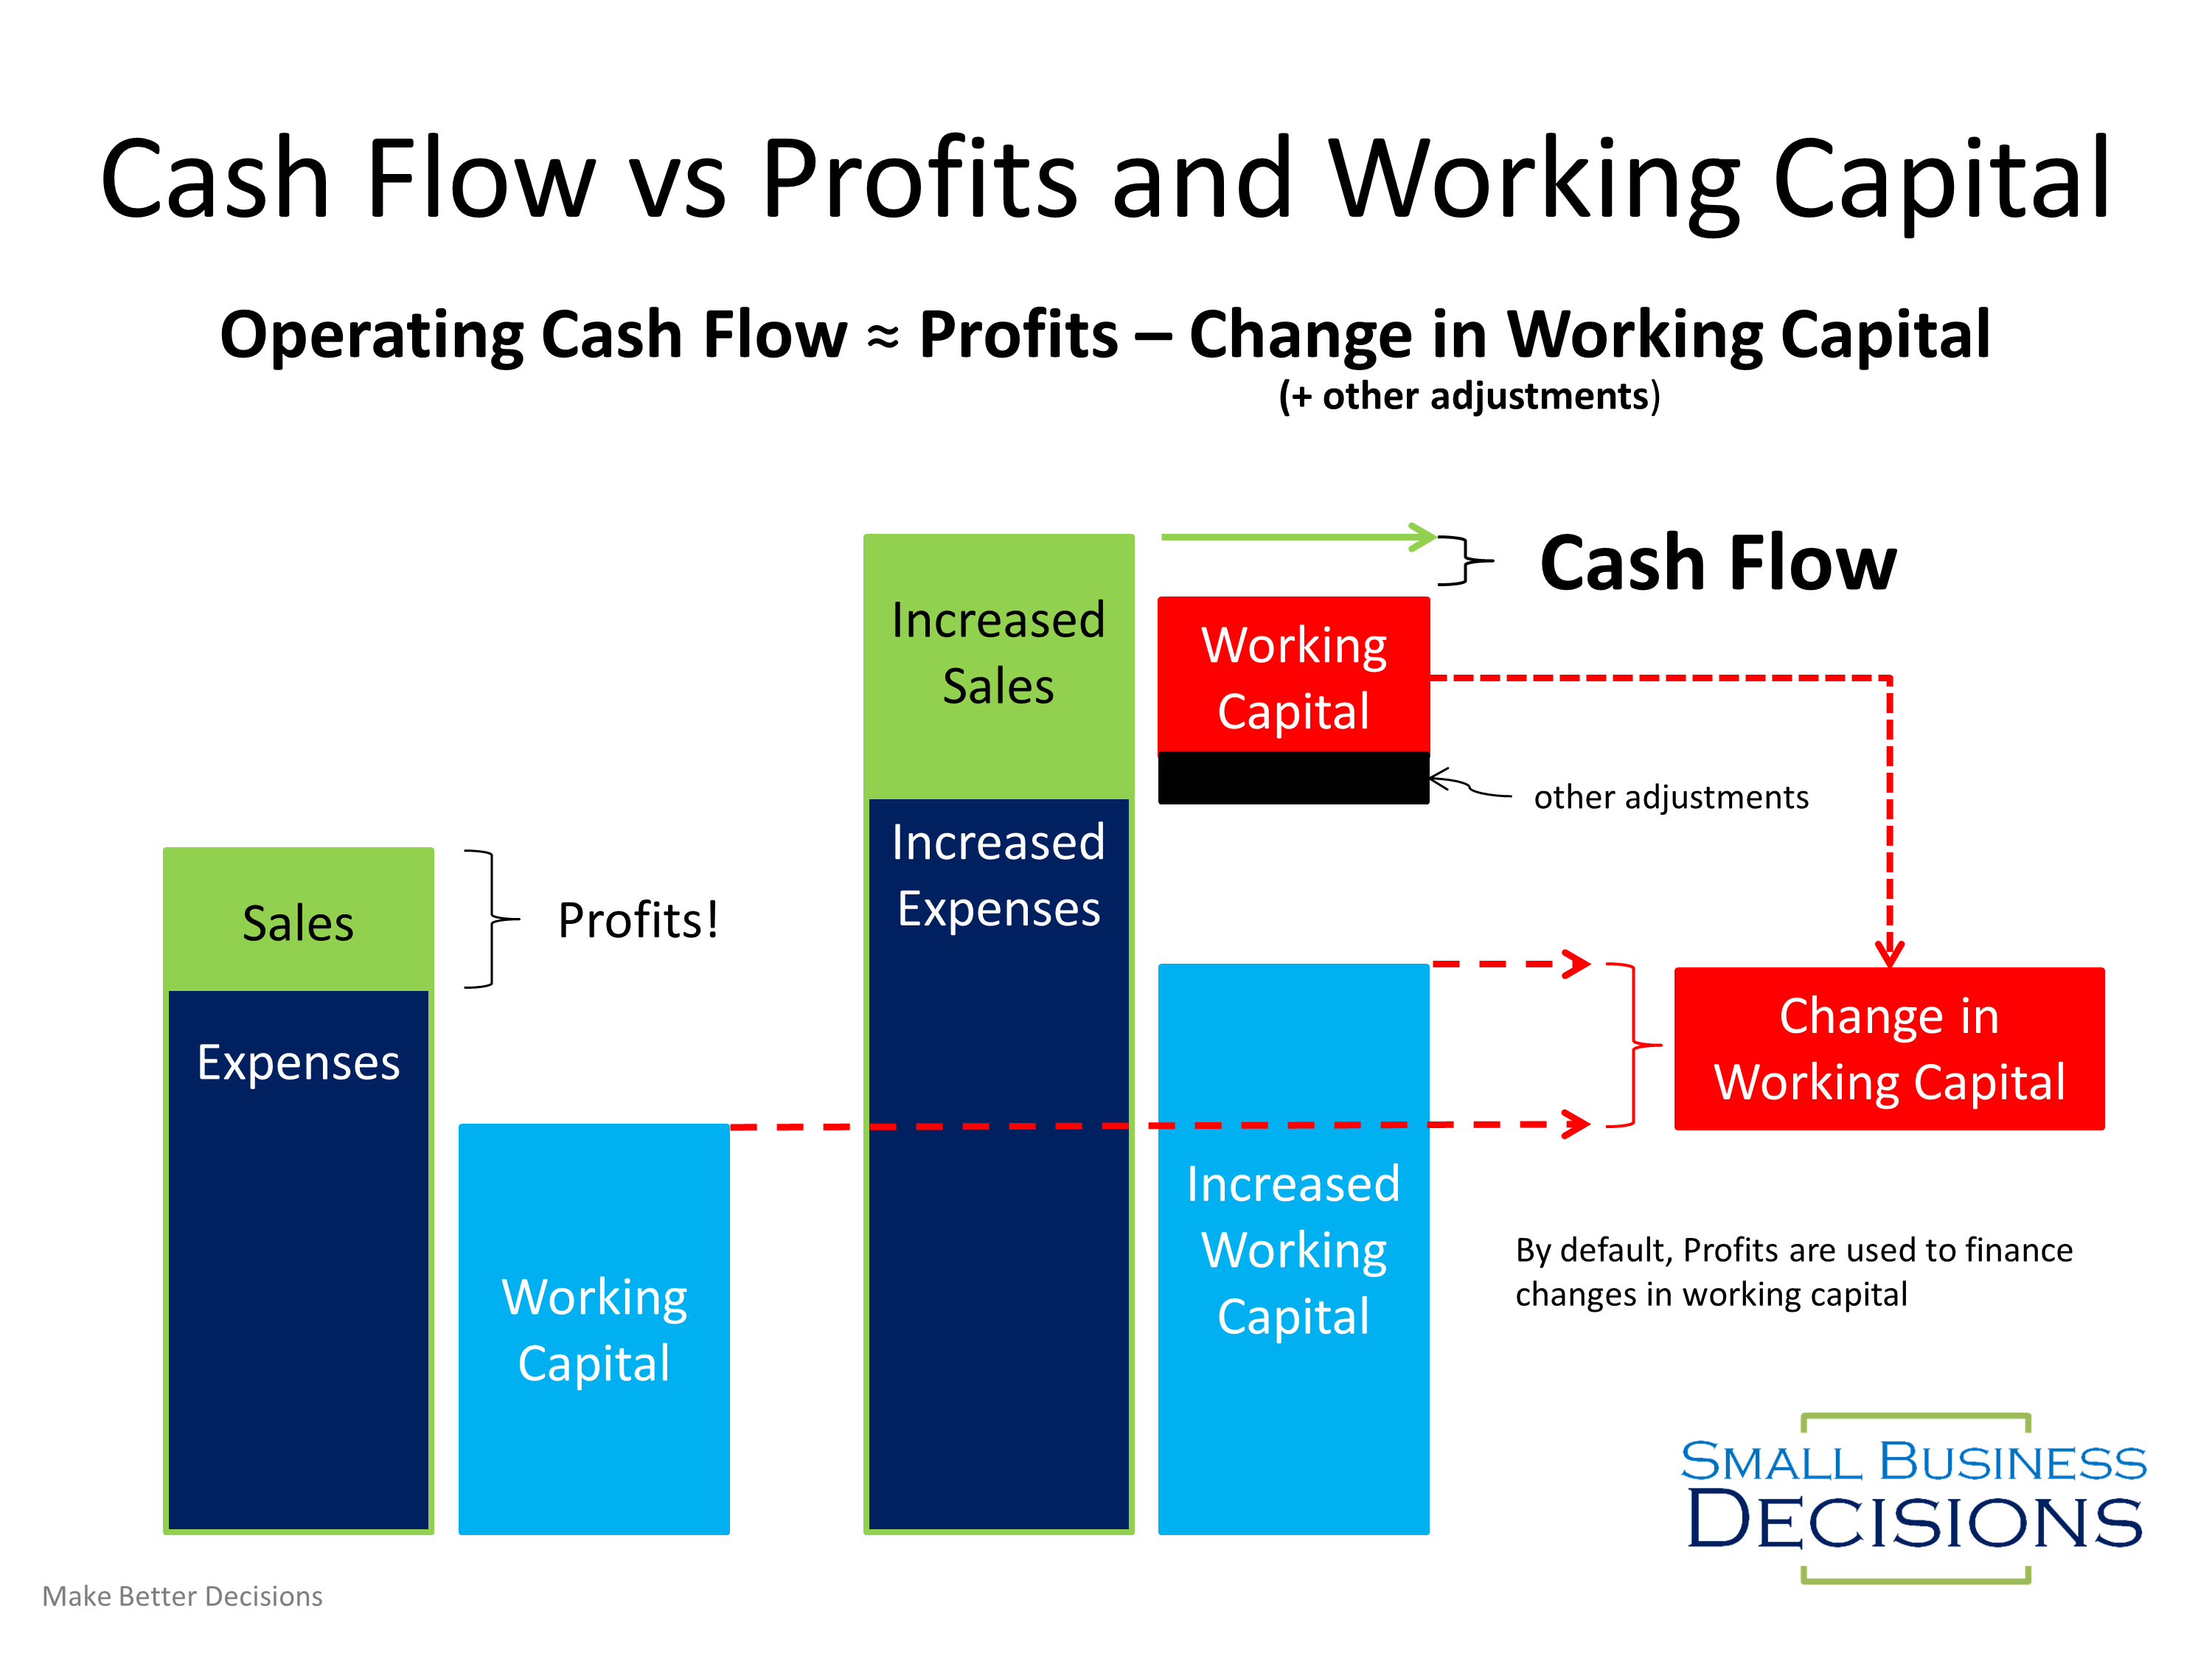 cash flow formula using operating financing investing